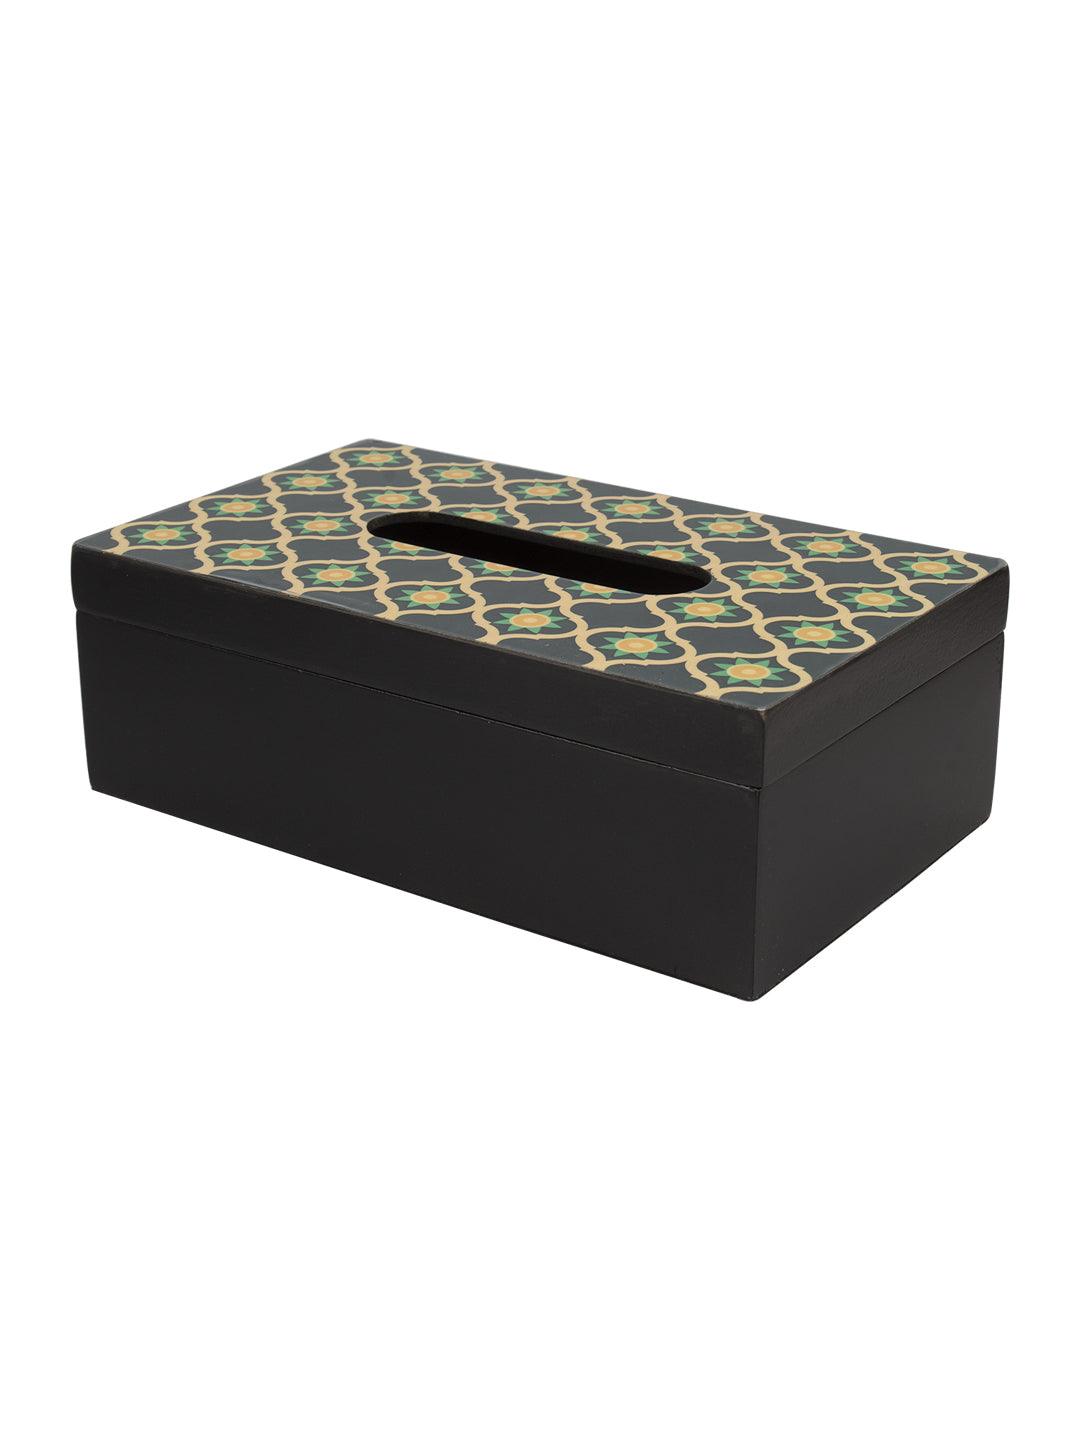 Mdf Green & Black Rectangular Tissue Box - MARKET 99